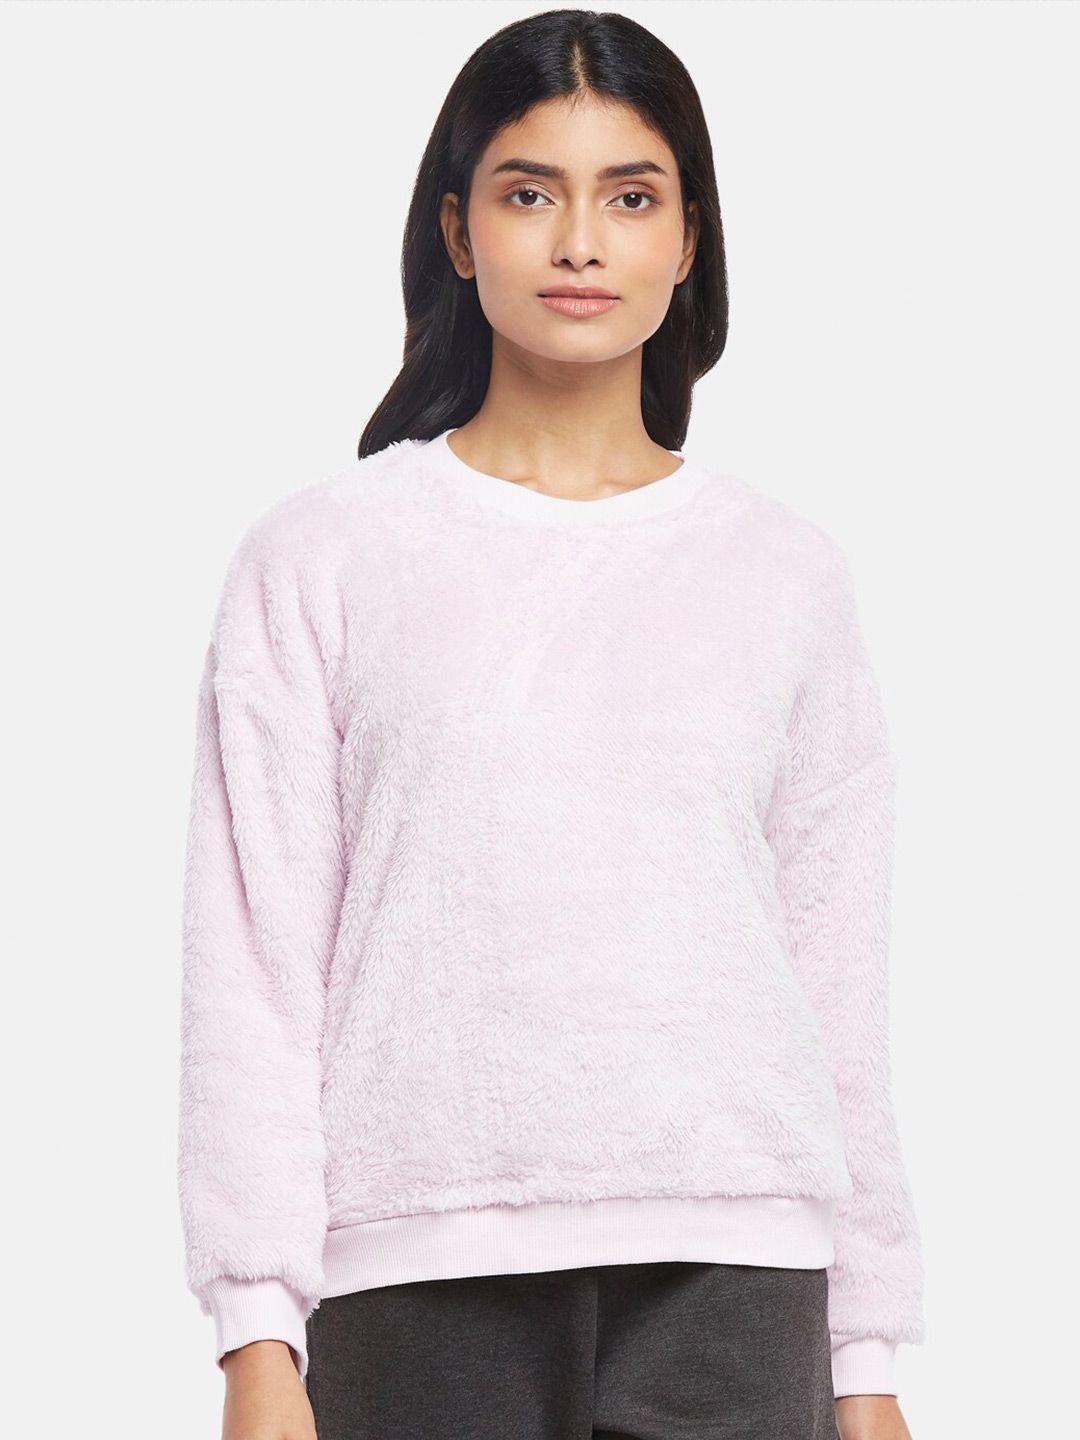 dreamz-by-pantaloons-women-sweatshirt